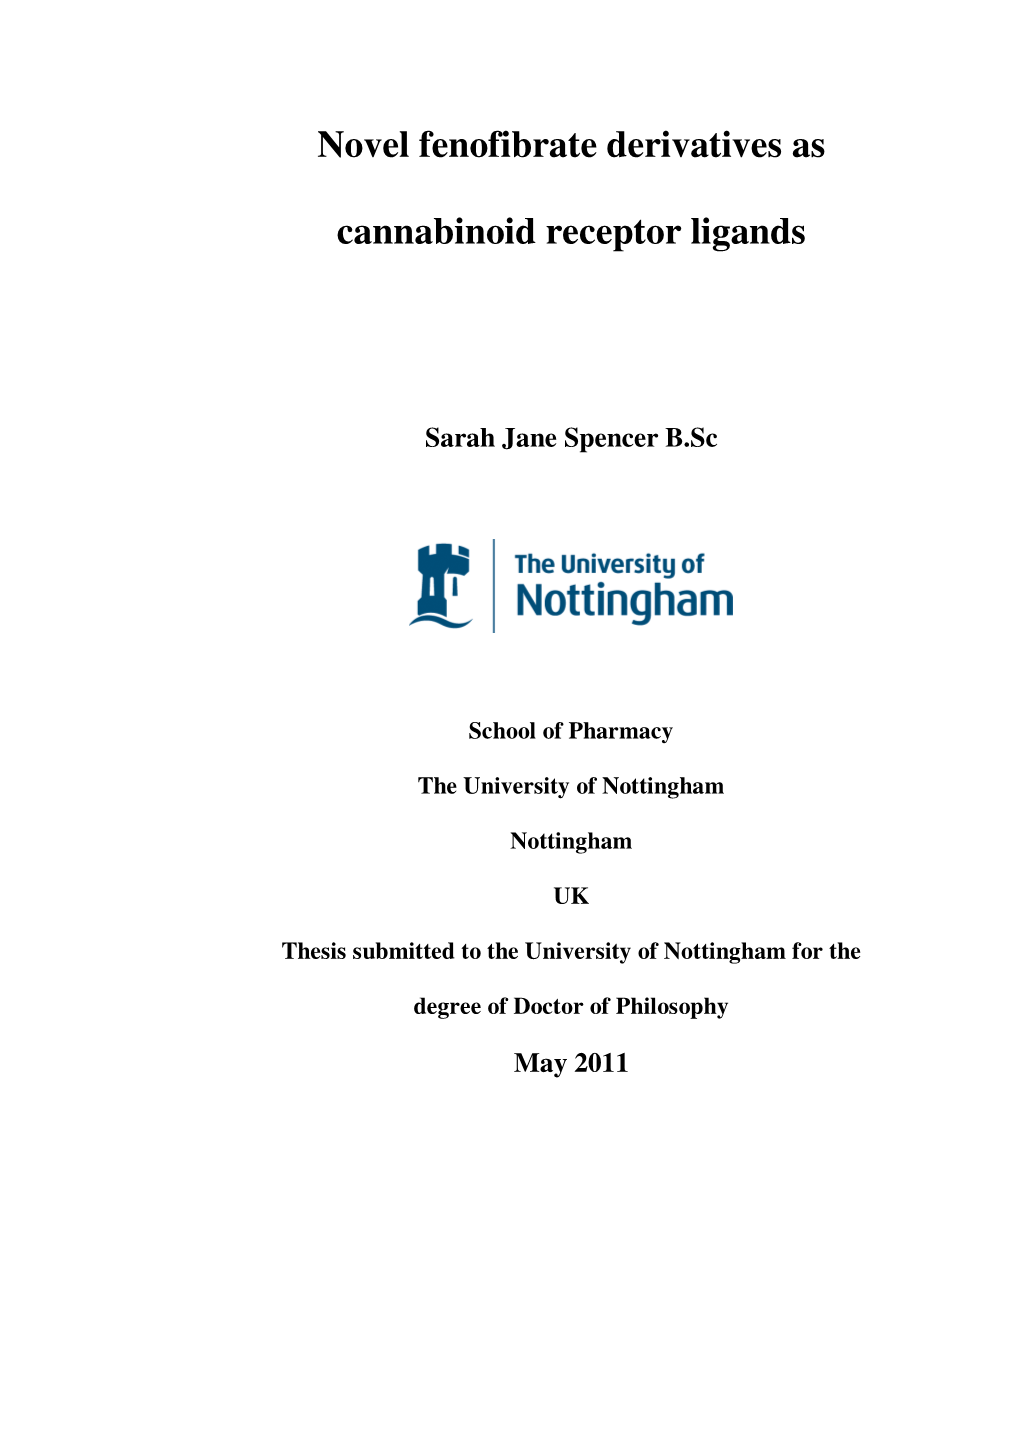 Novel Fenofibrate Derivatives As Cannabinoid Receptor Ligands